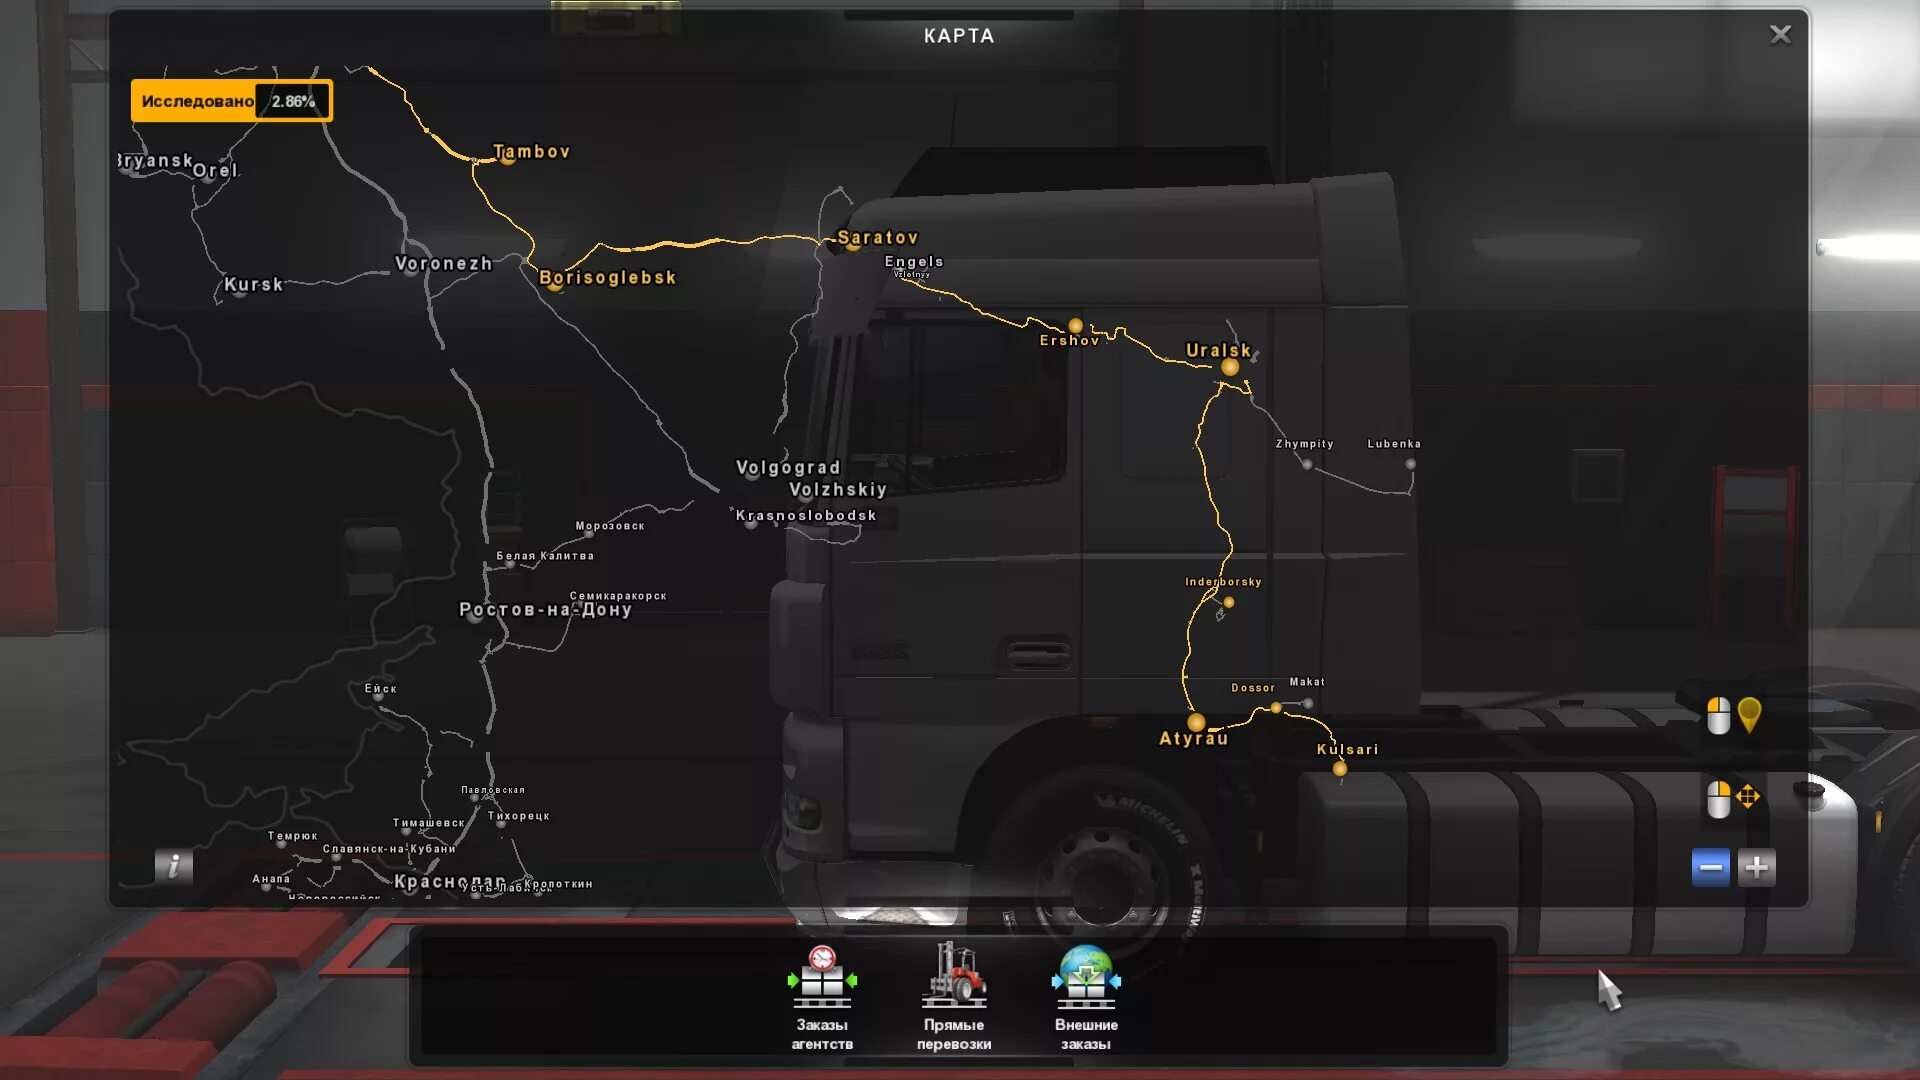 Дефолт карта етс 2. Карта Южный регион для етс 2. Карта Южного региона Euro Truck Simulator 2. Euro Truck Simulator 2 карта Южный регион 1.45.